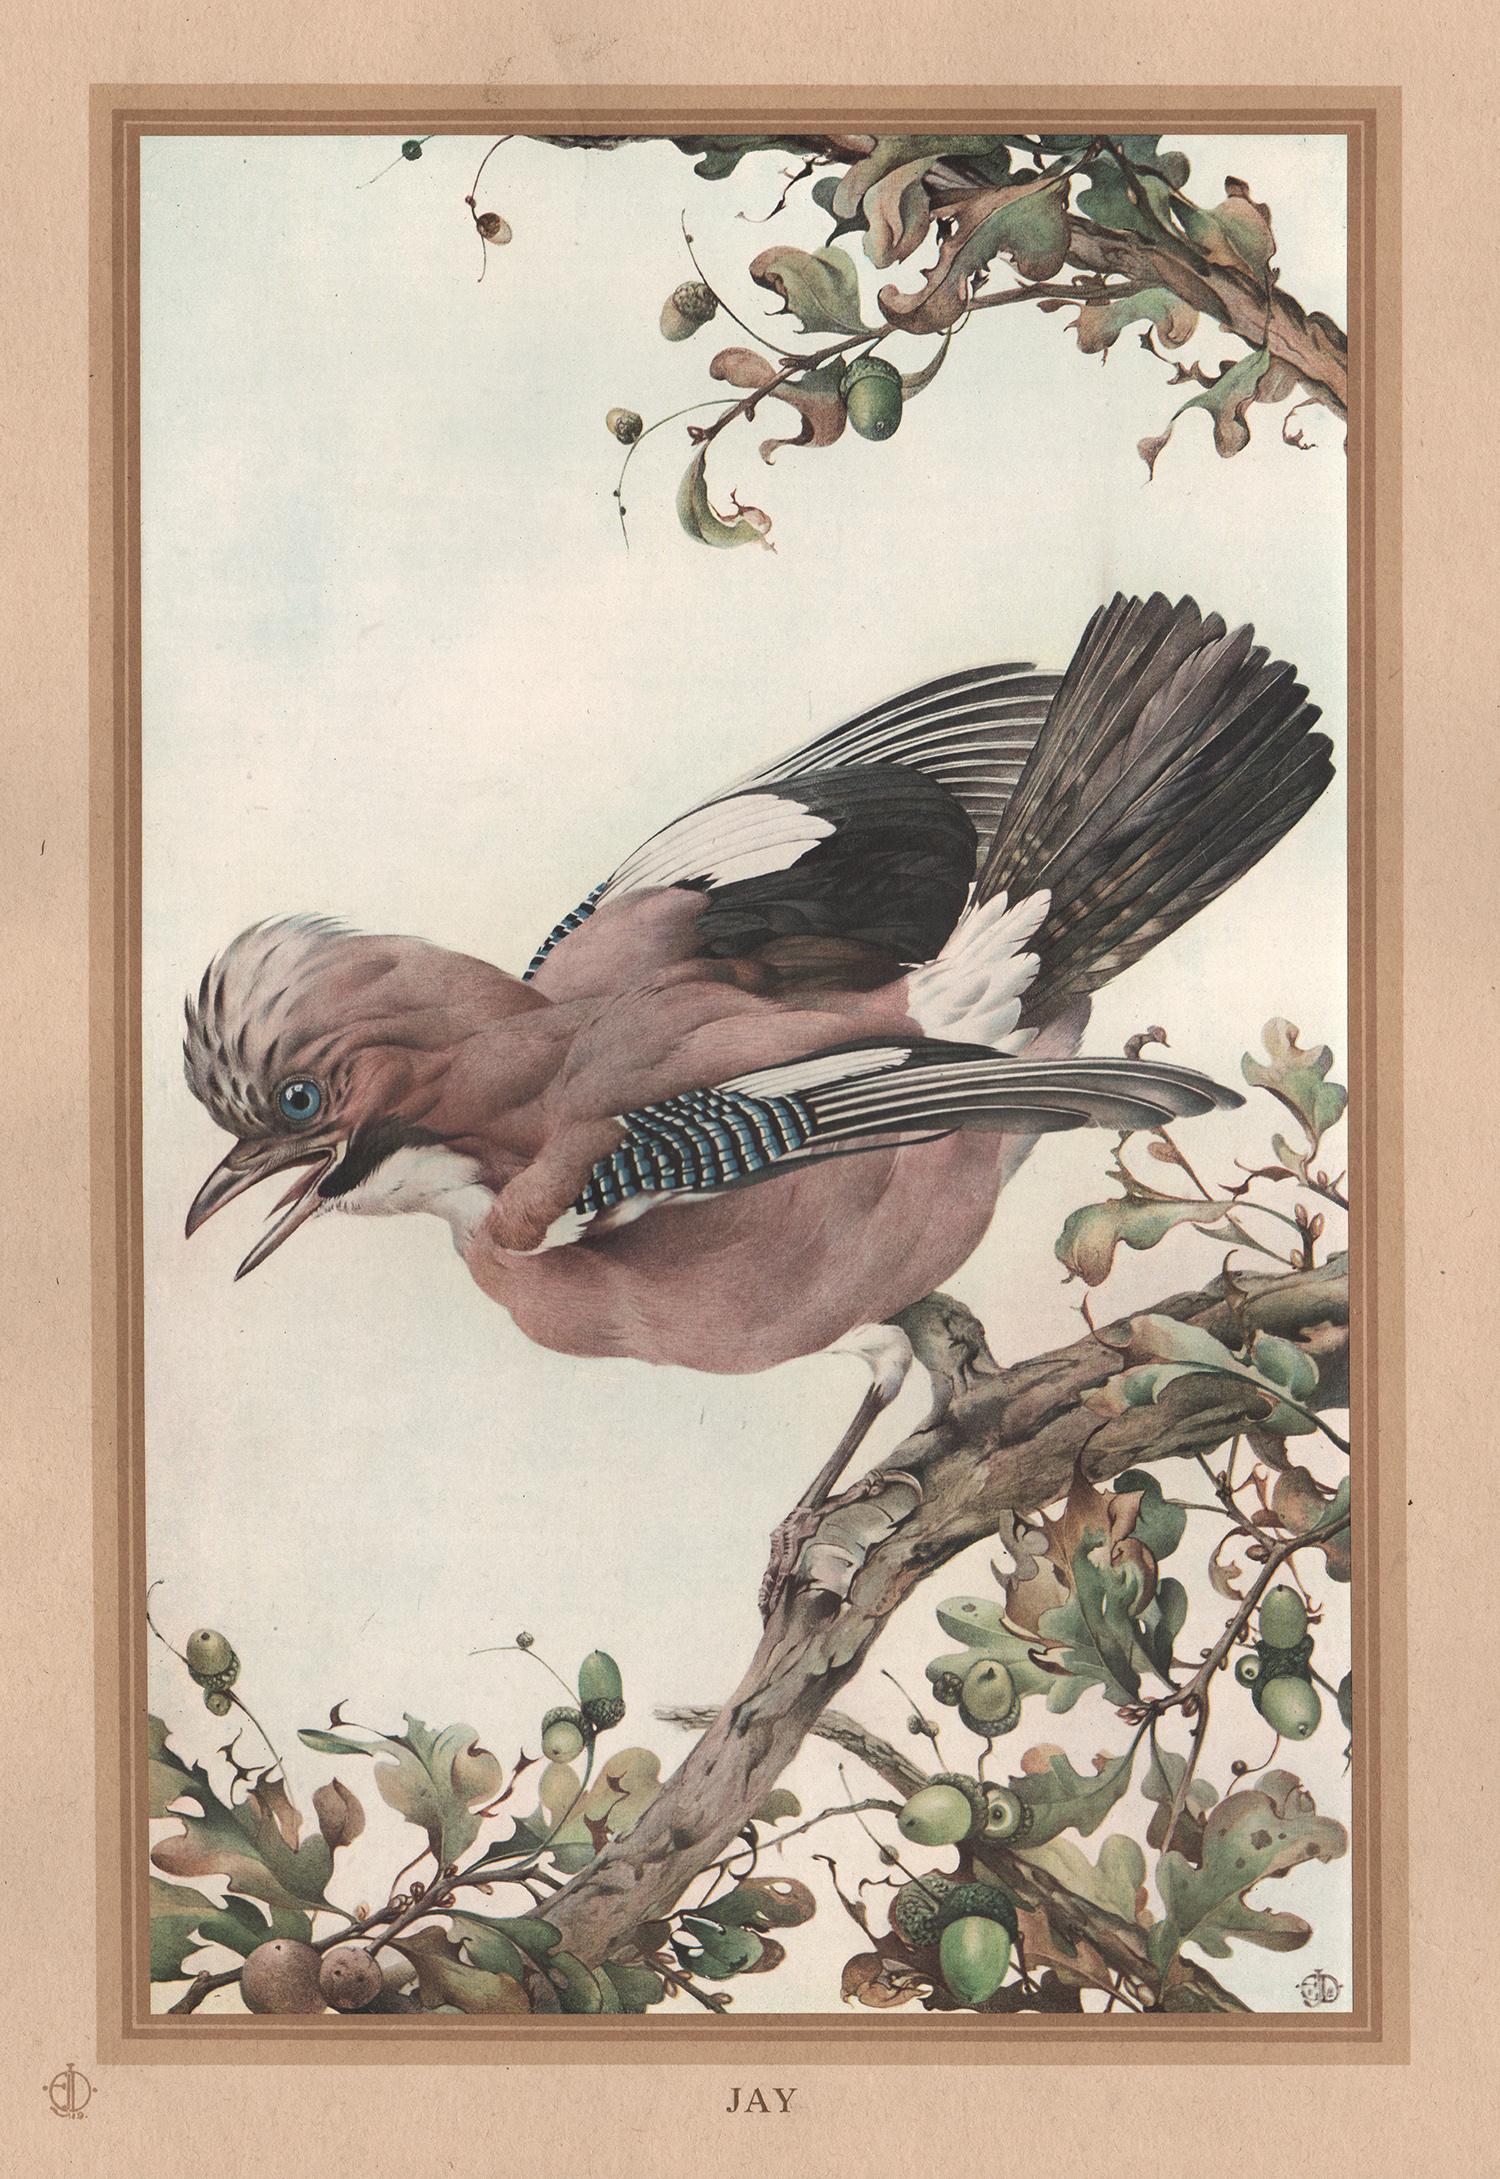 After Edward Detmold Animal Print - 'Jay', English bird print after Edward Detmold, circa 1919